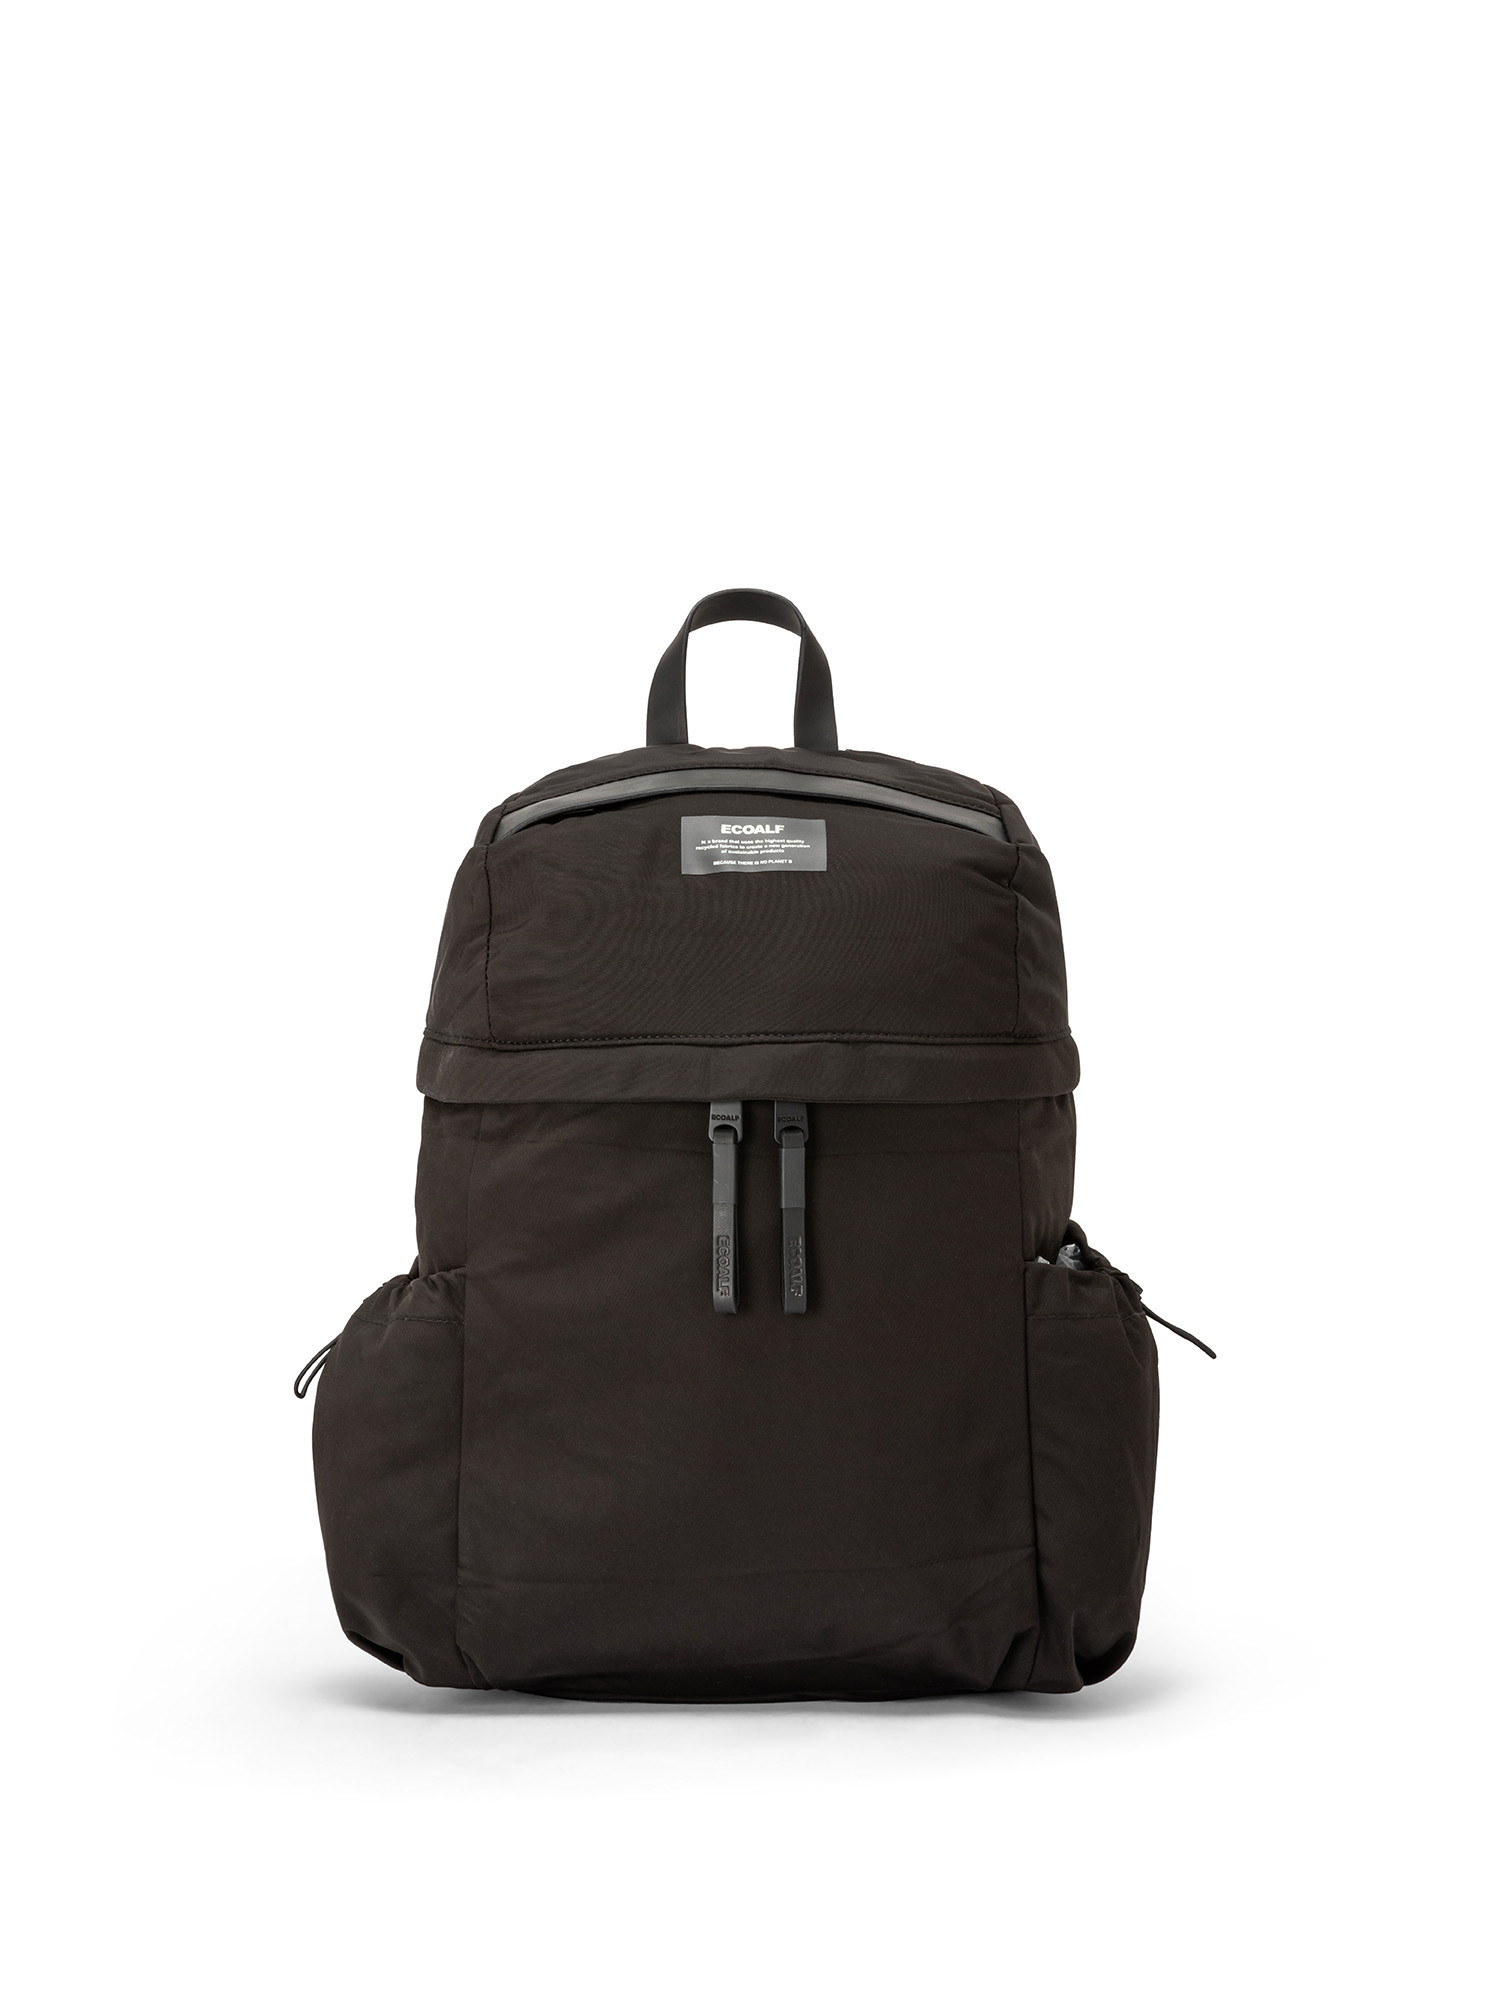 Ecoalf - Waterproof Mom Backpack, Black, large image number 0